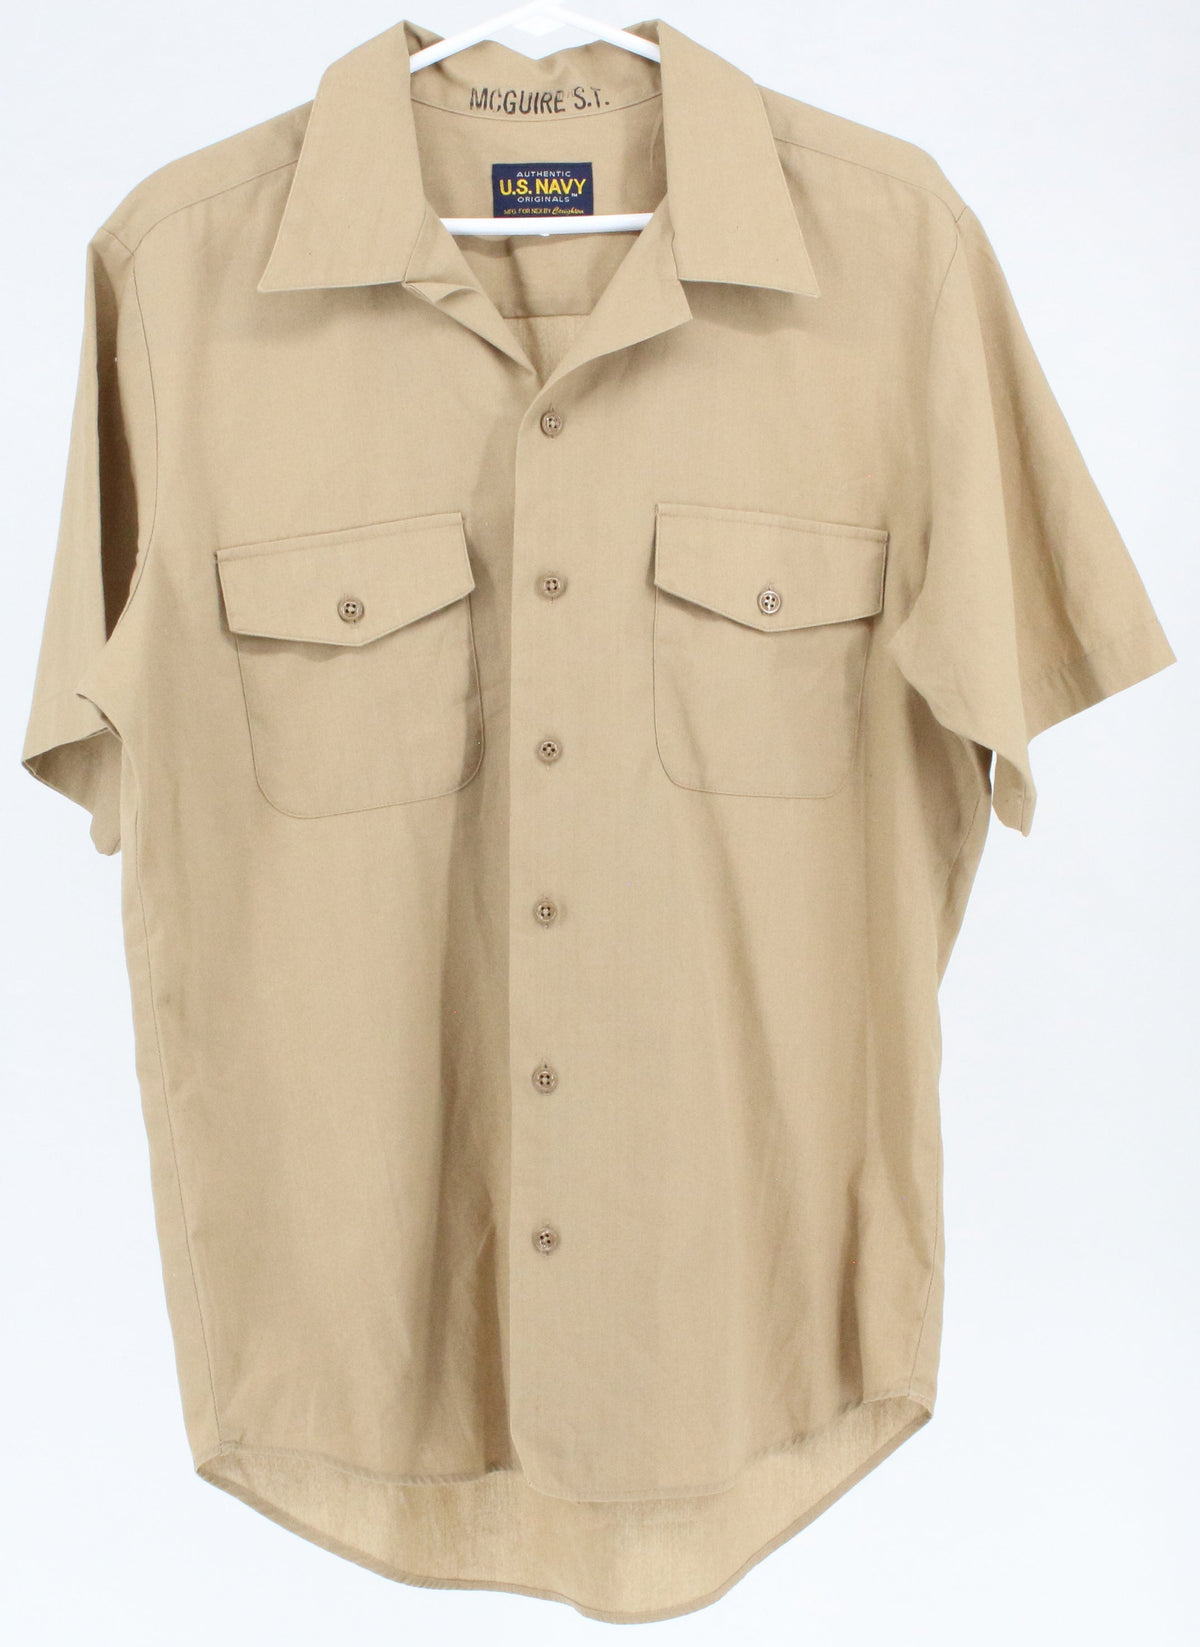 Authentic U.S Navy Original Uniform Khaki Short Sleeve Shirt